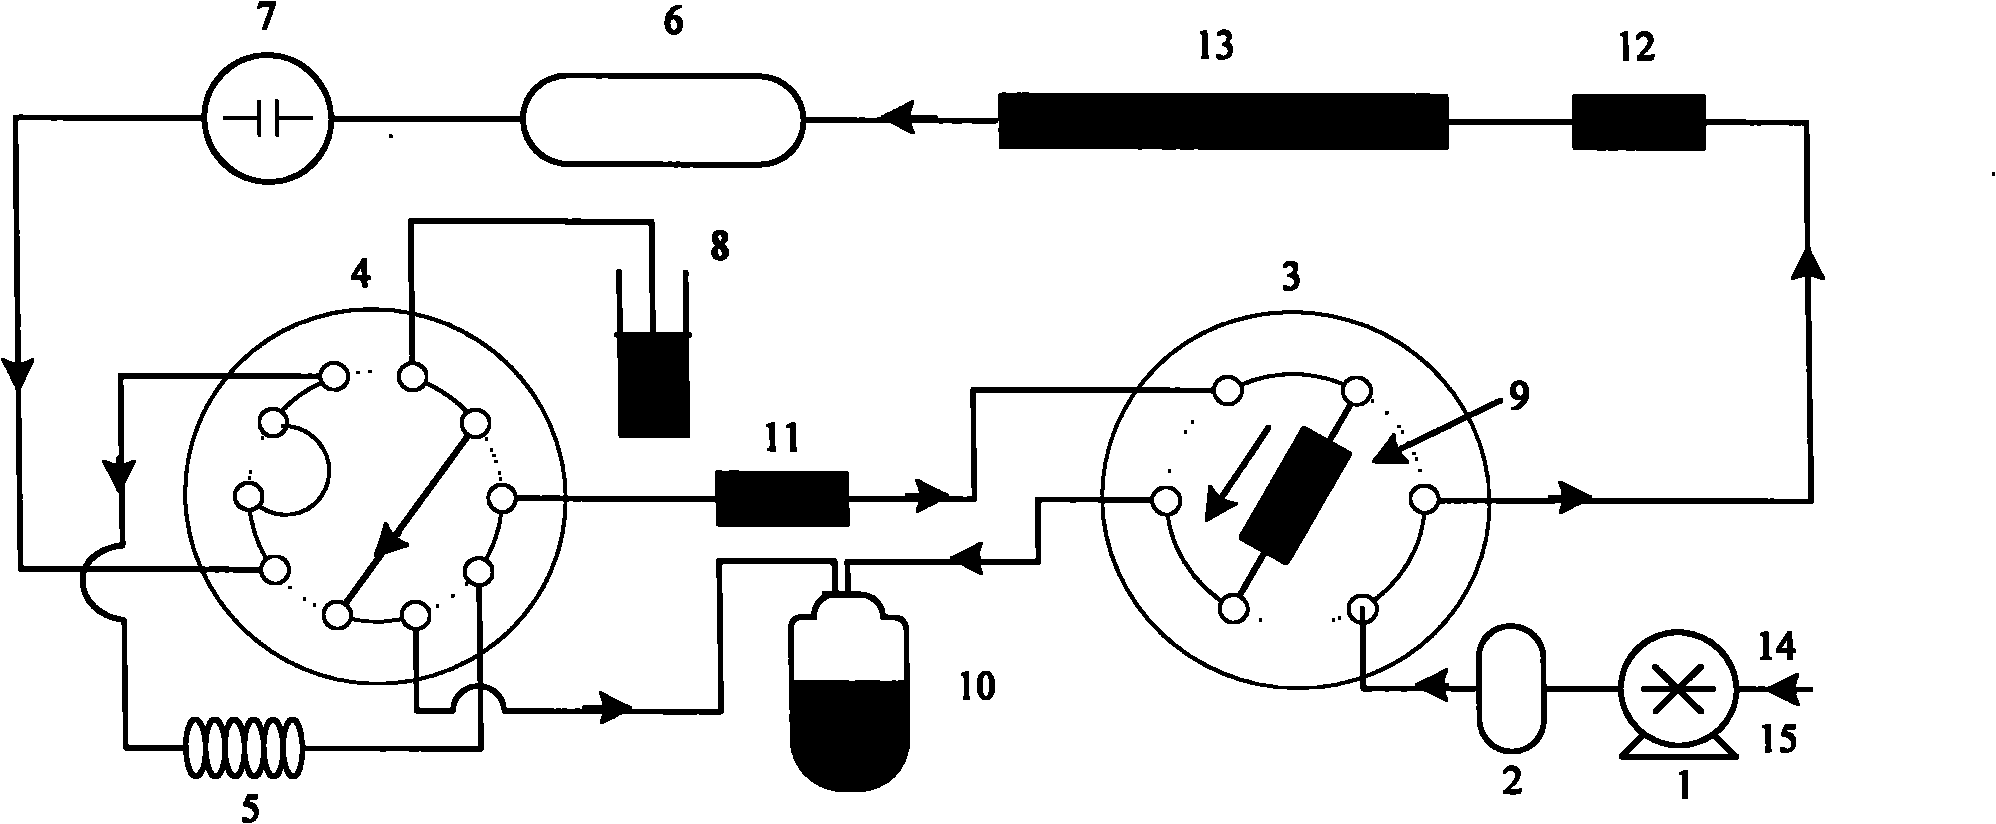 Combination method of polymer carbon nanotube chromatographic column and ion chromatography single pump column switching technology